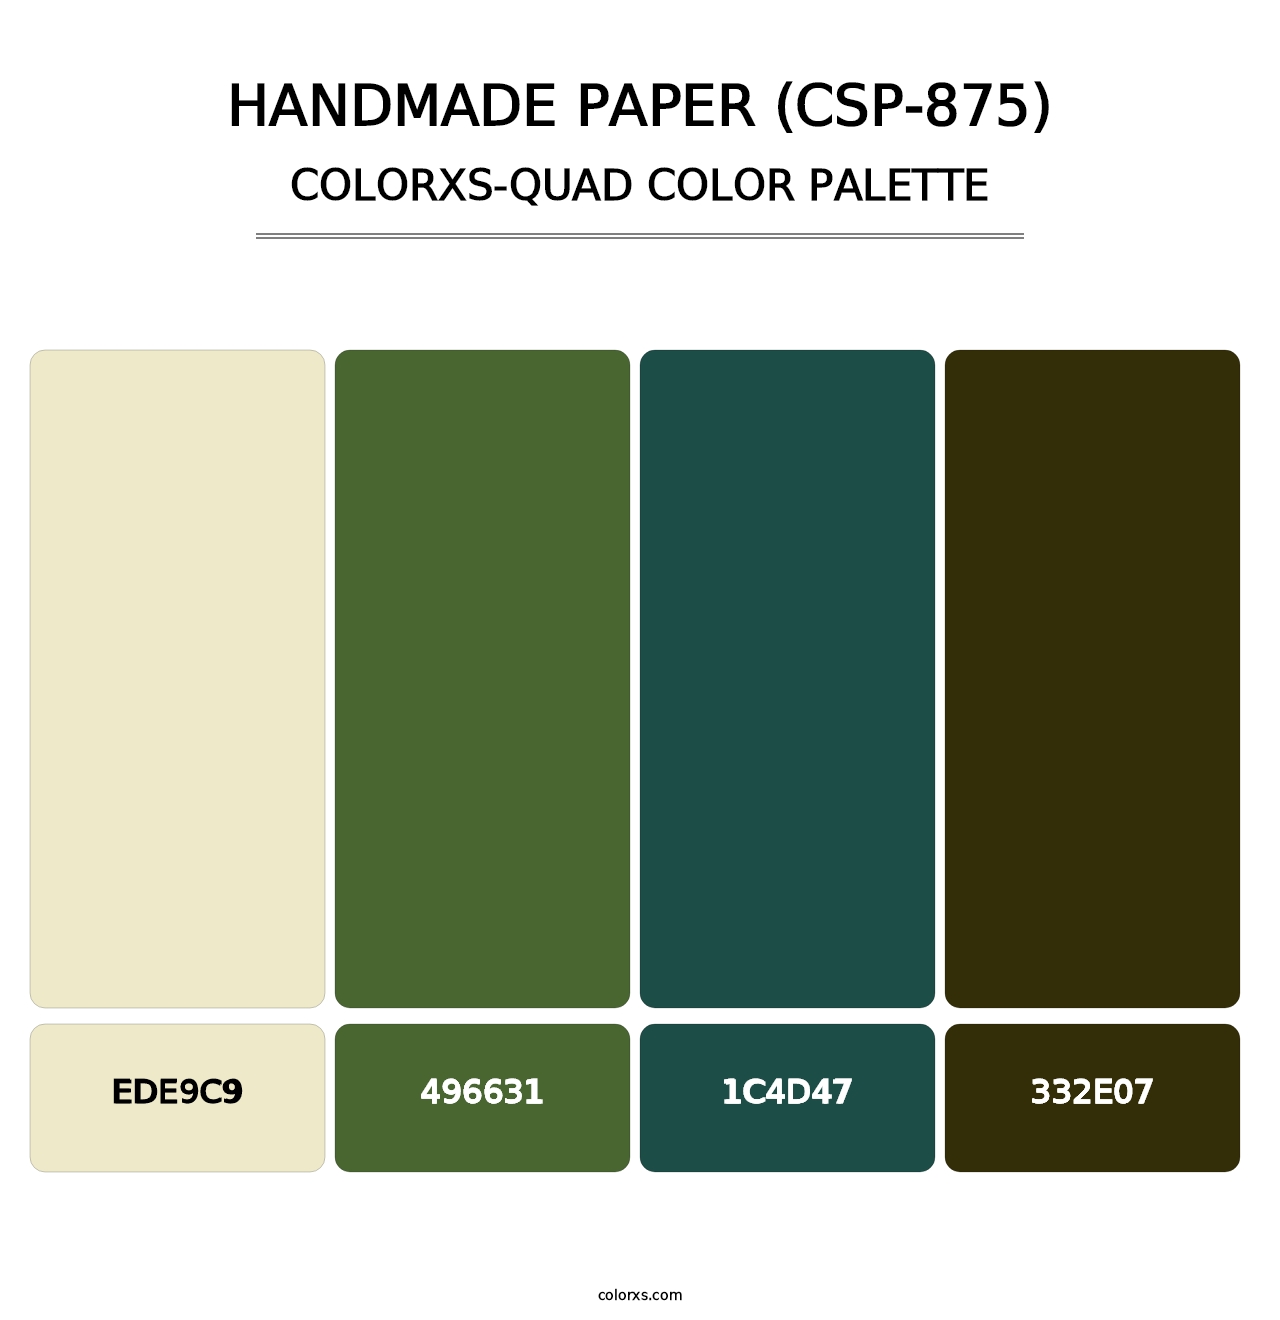 Handmade Paper (CSP-875) - Colorxs Quad Palette